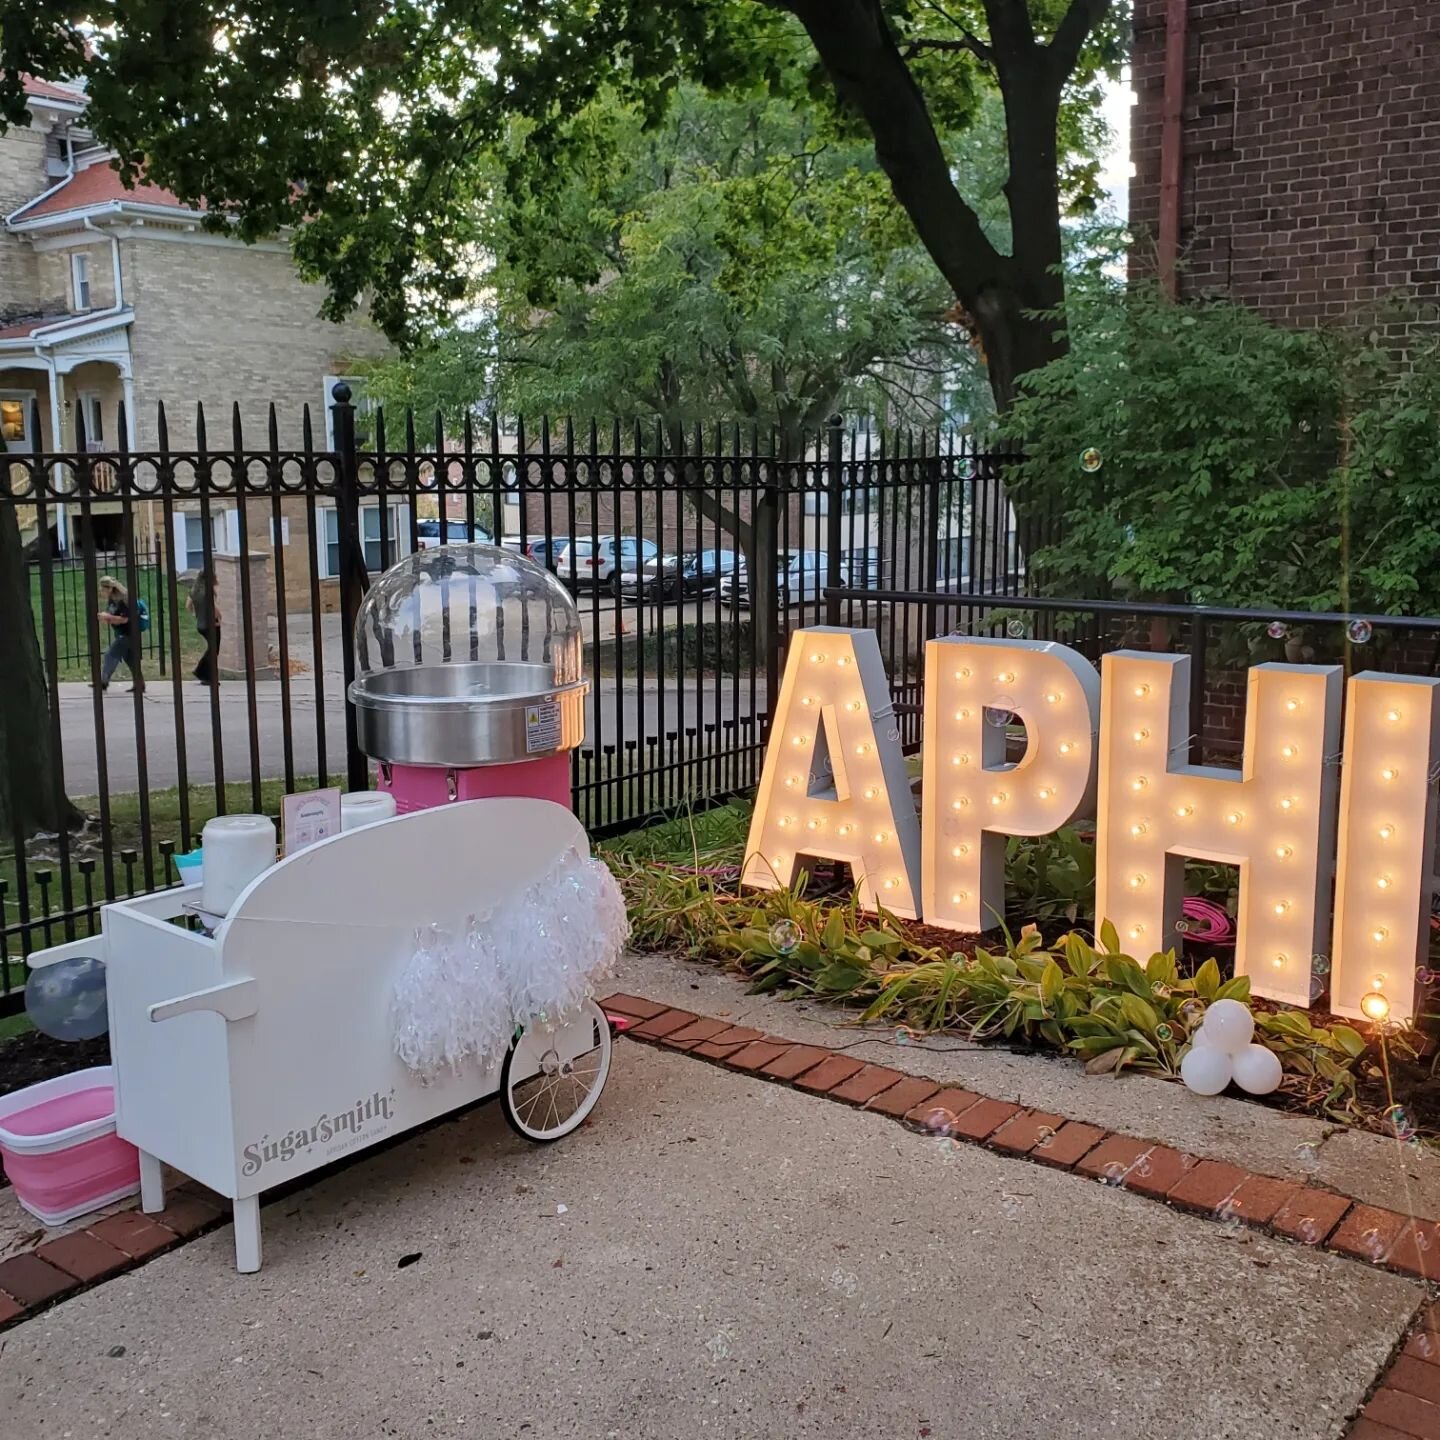 So fun celebrating rush week with Alpha PhI! @alphaphiwisconsin @alphalitmadison